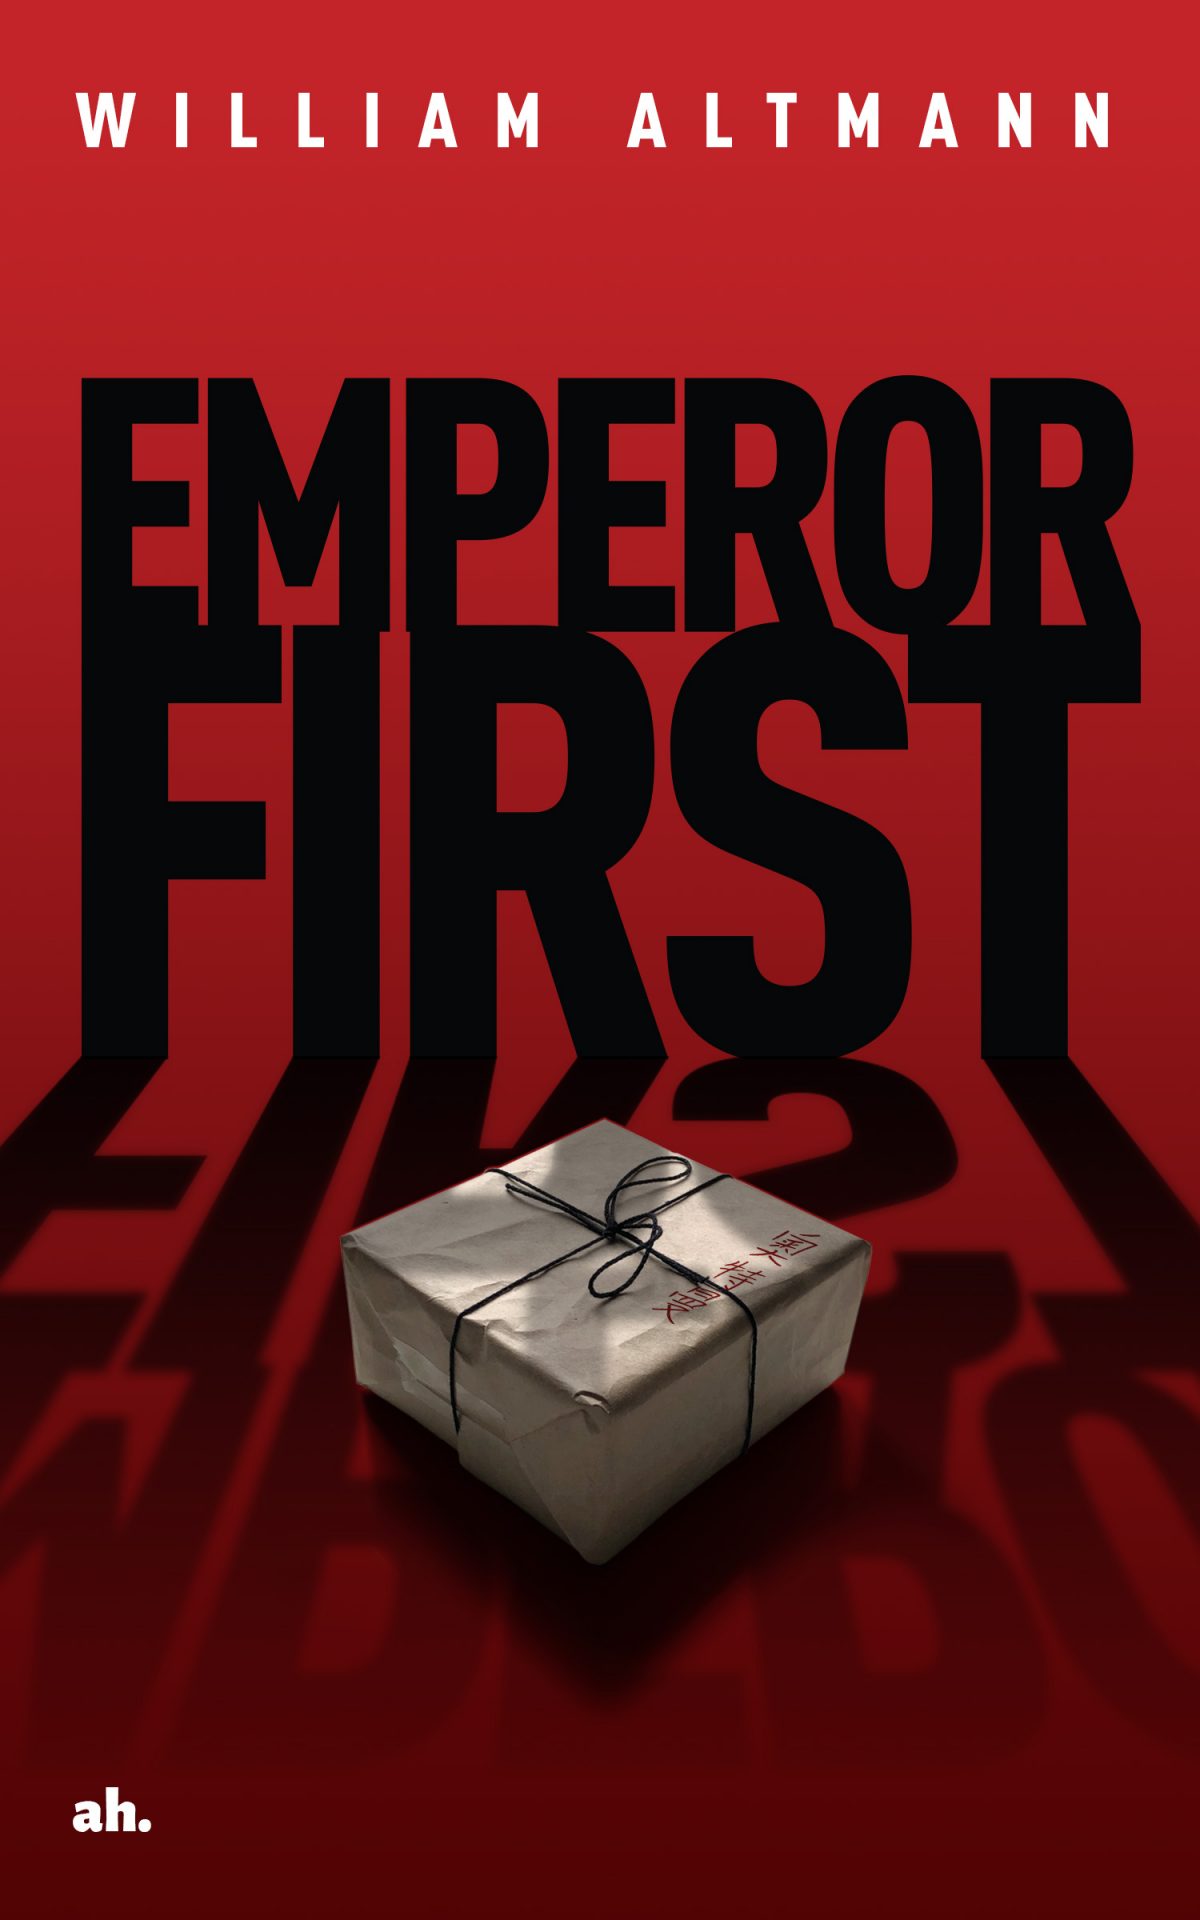 Emperor First